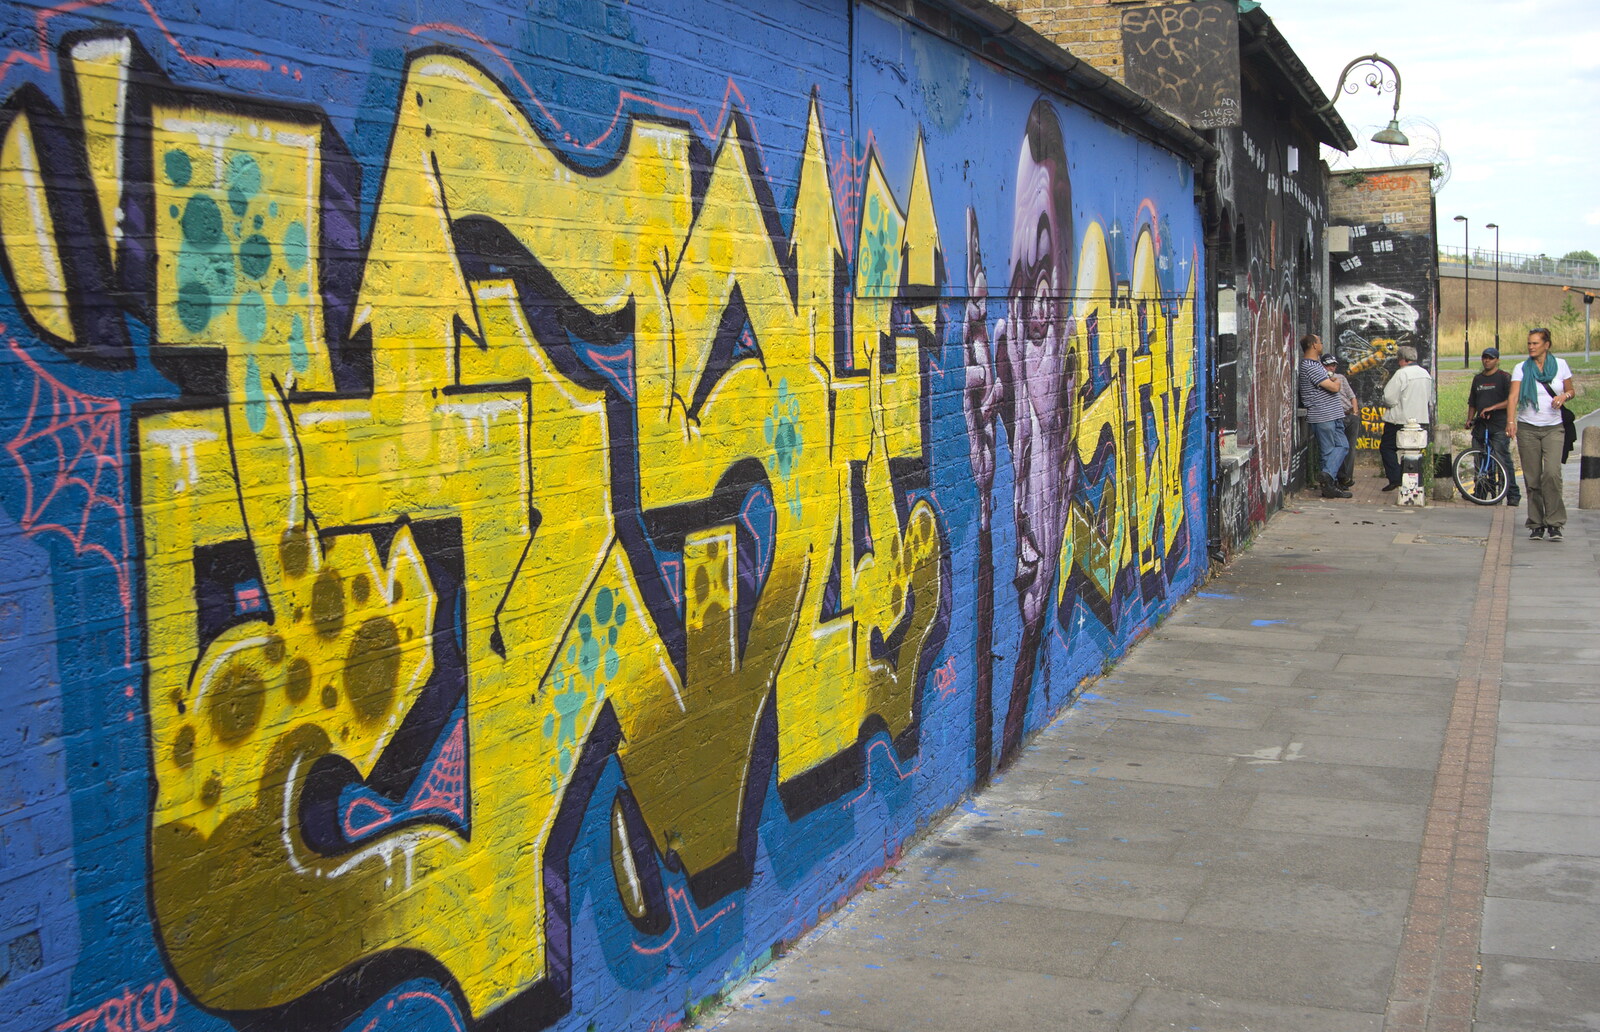 Graffiti off Brick Lane from Spitalfields and Brick Lane Street Art, Whitechapel, London - 10th August 2013